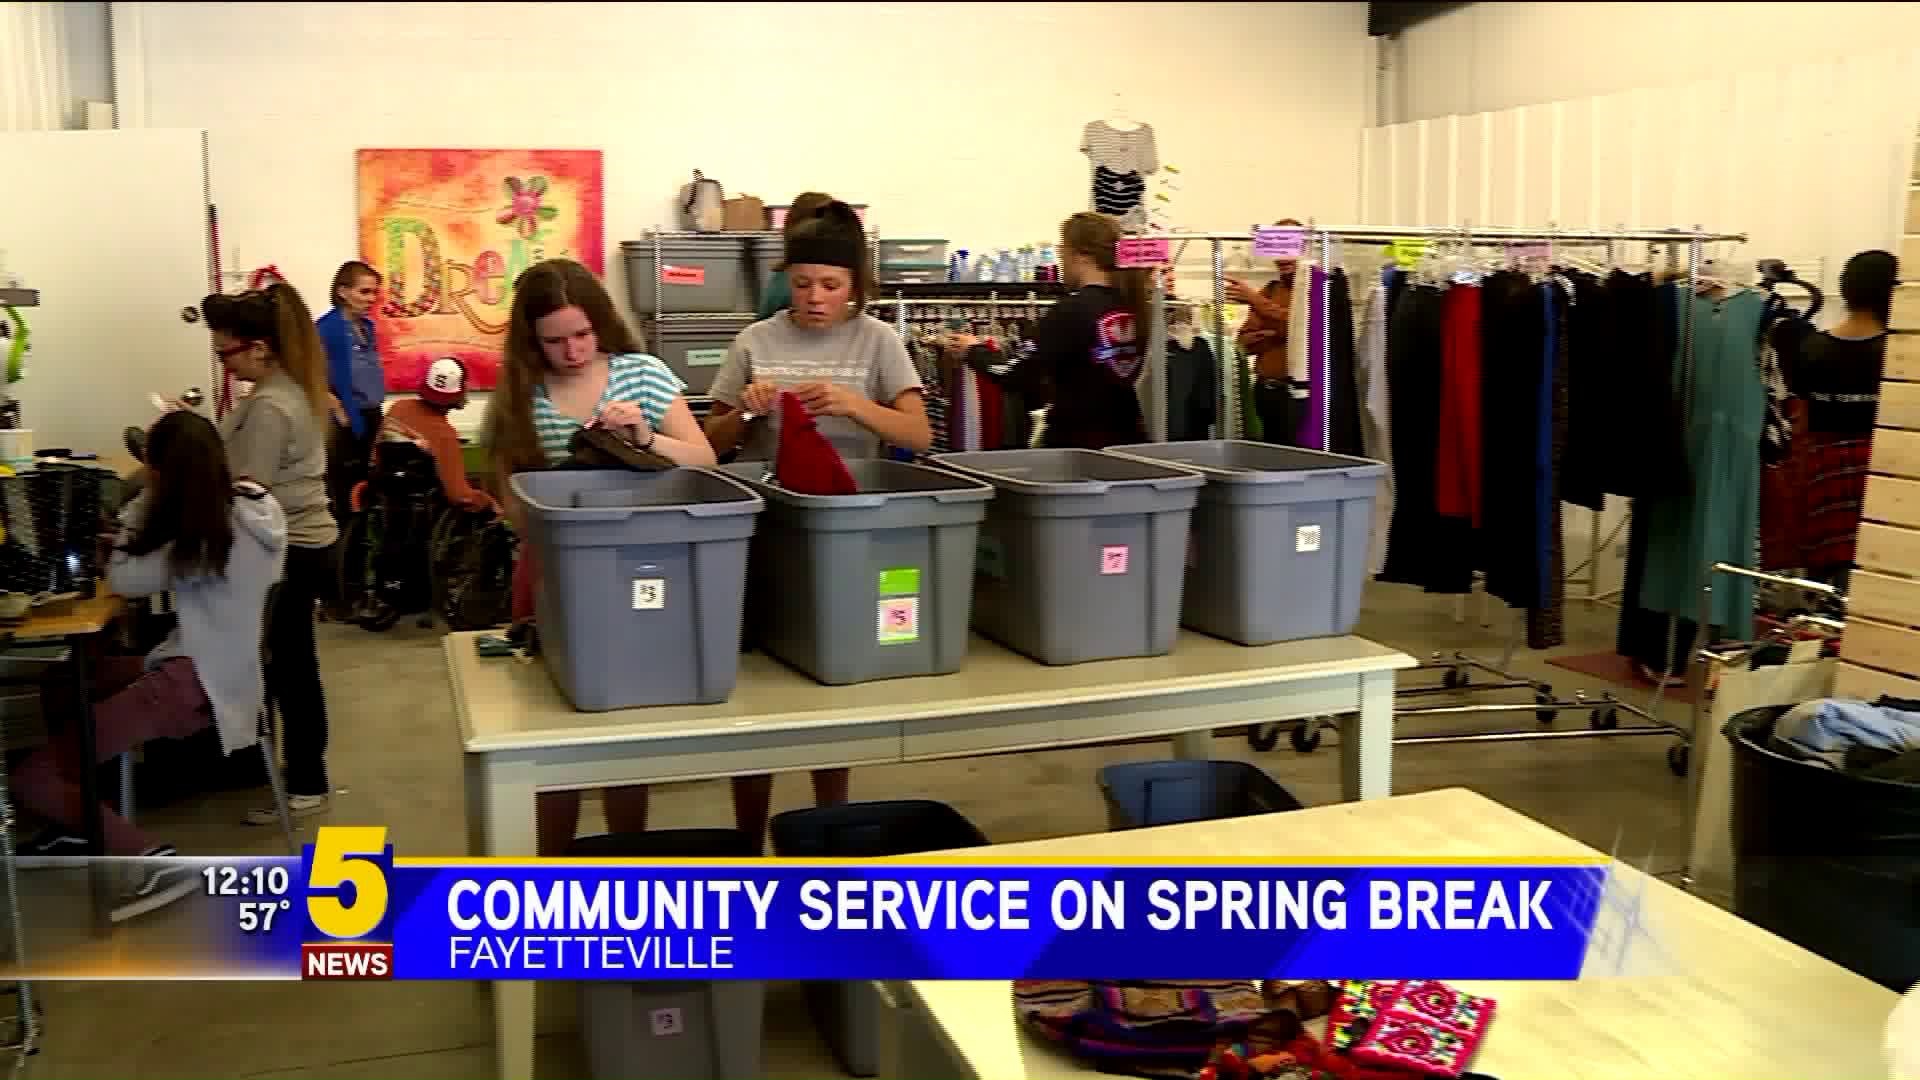 Community Service on Spring Break